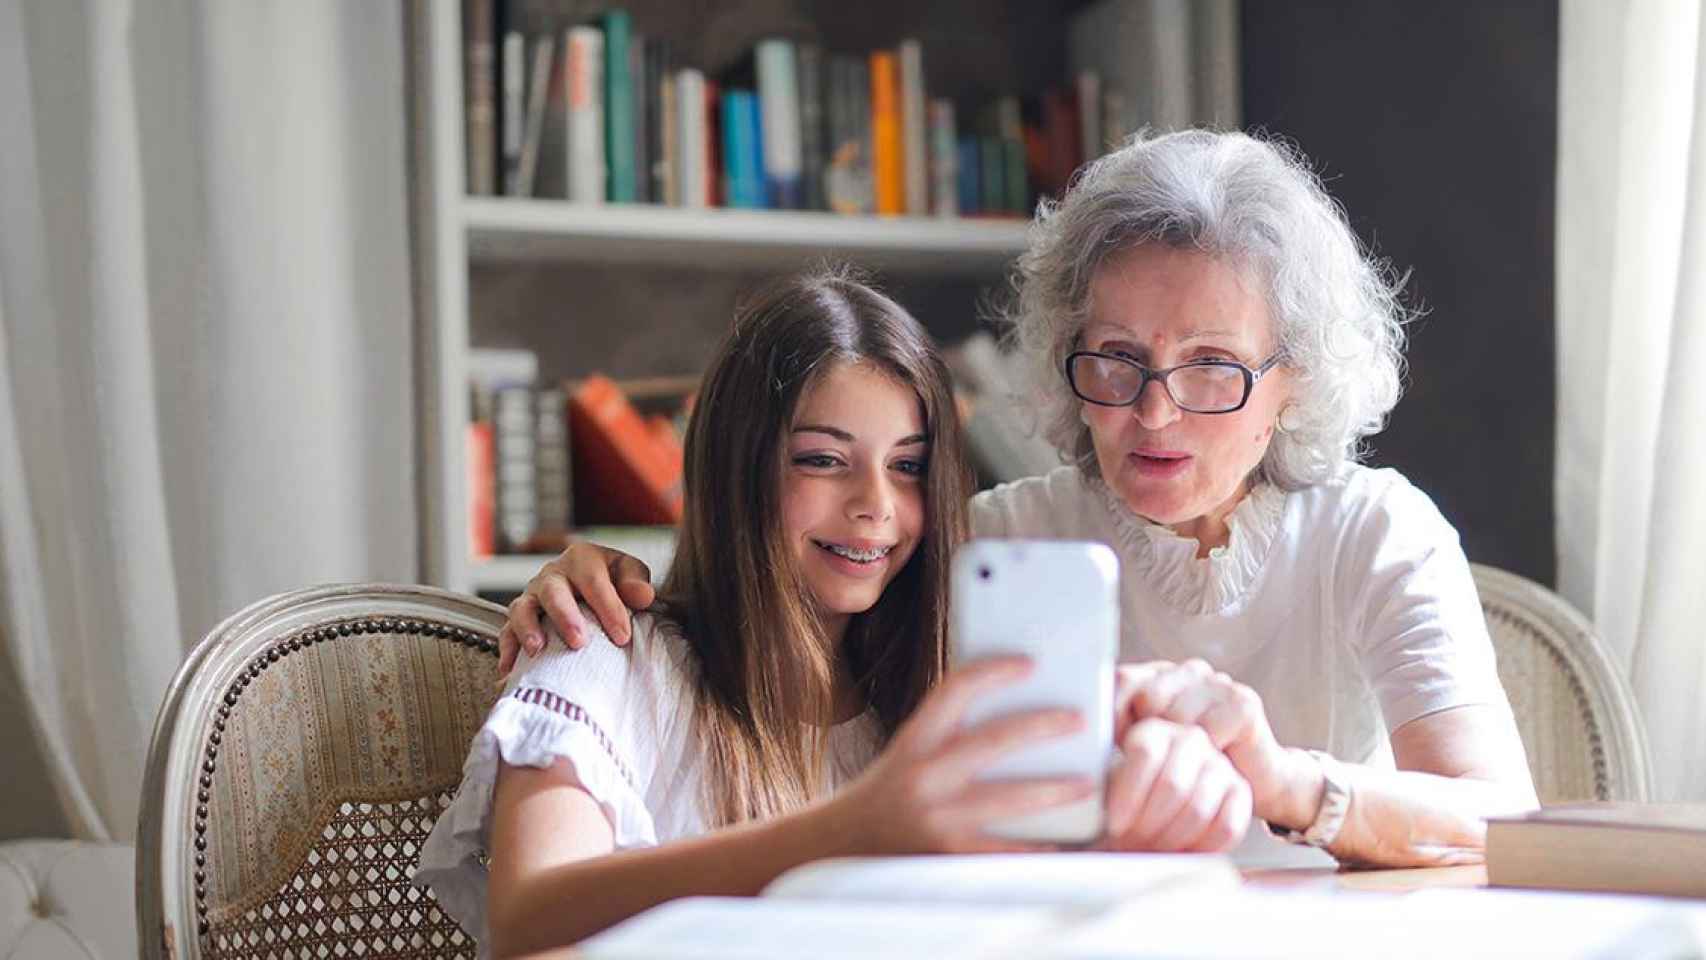 Una niña enseña a usar un smartphone a su abuela / PEXELS